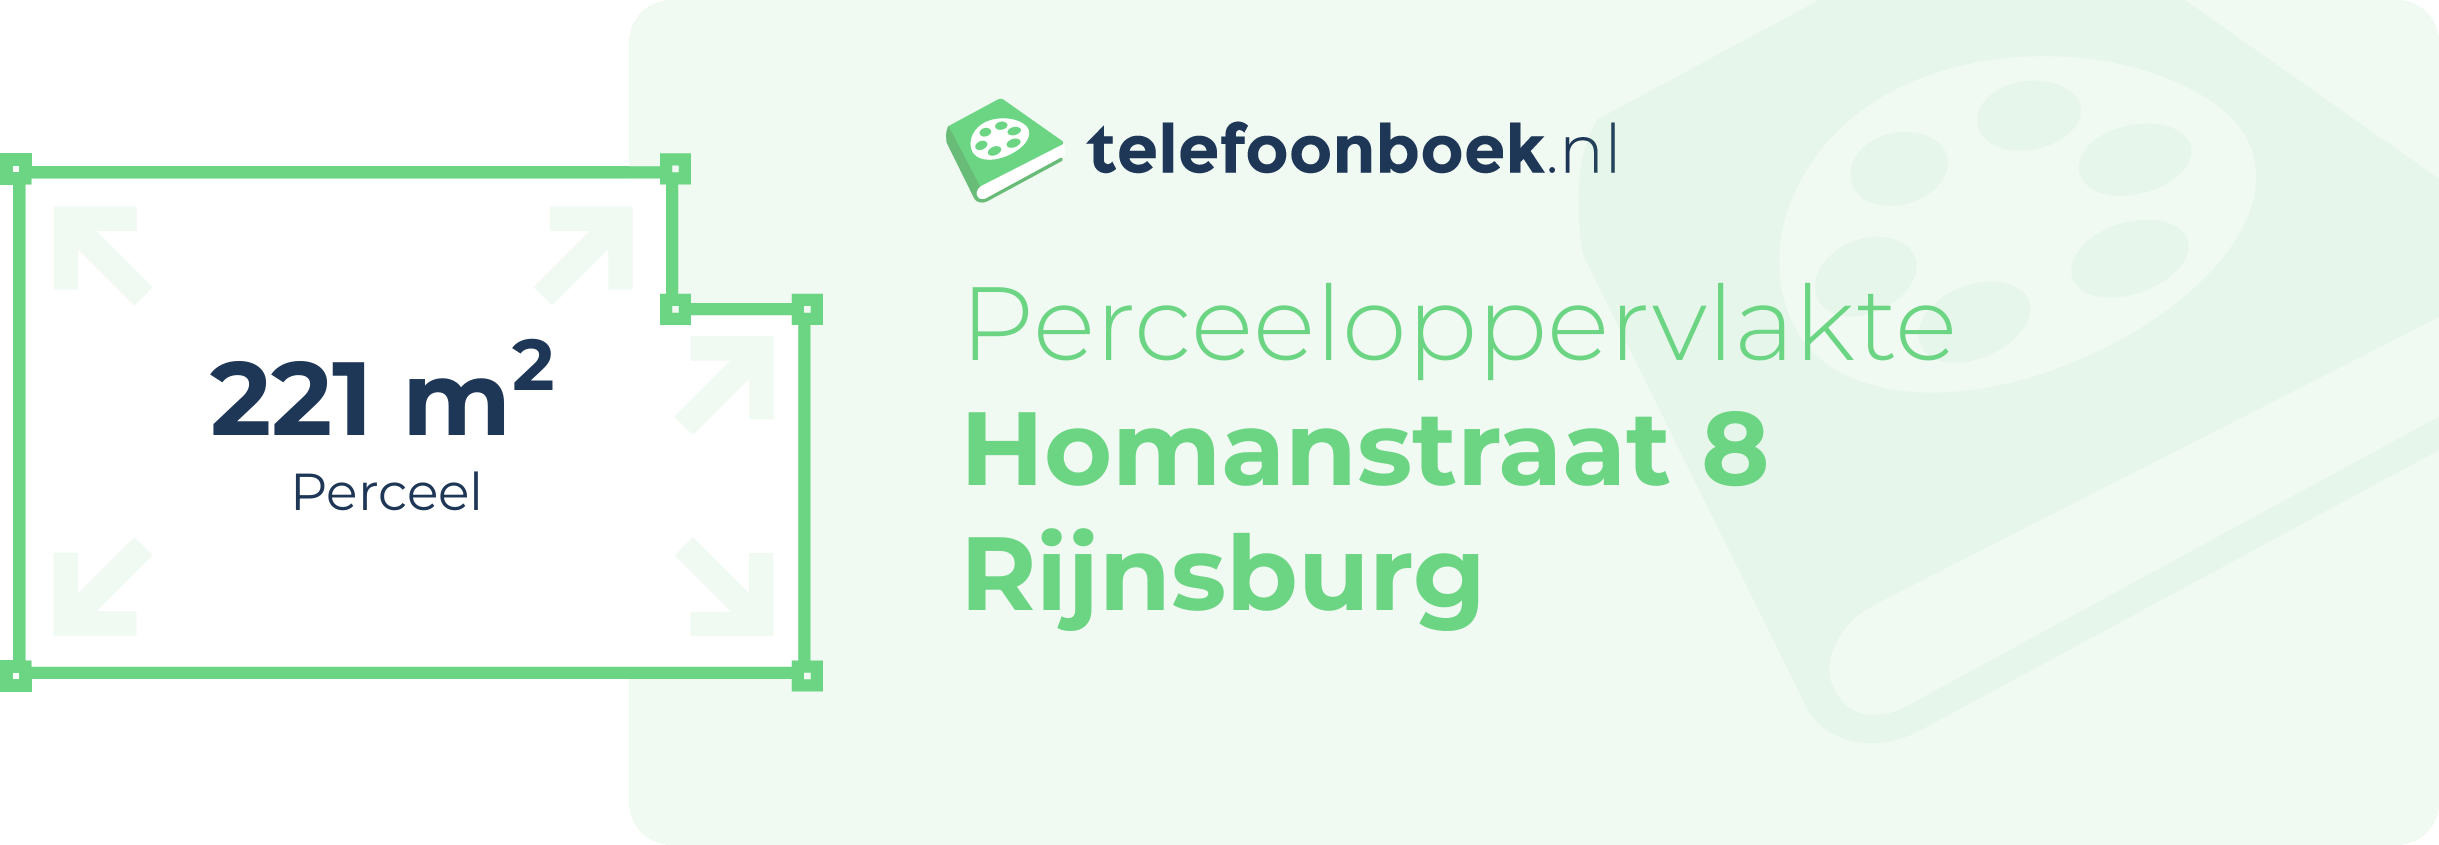 Perceeloppervlakte Homanstraat 8 Rijnsburg